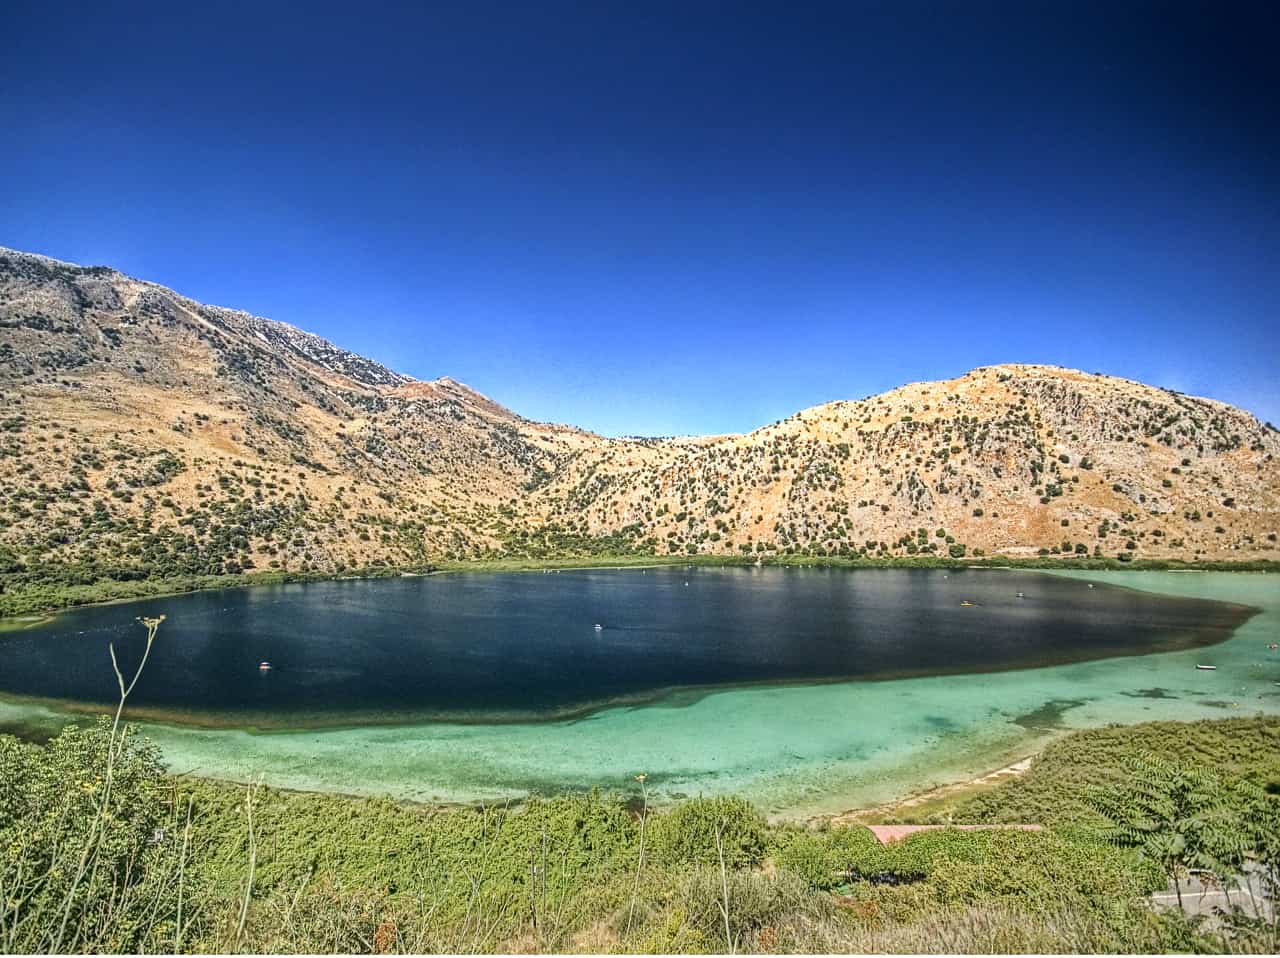 Indeed, Crete has its own lake ... the lake of Kournas